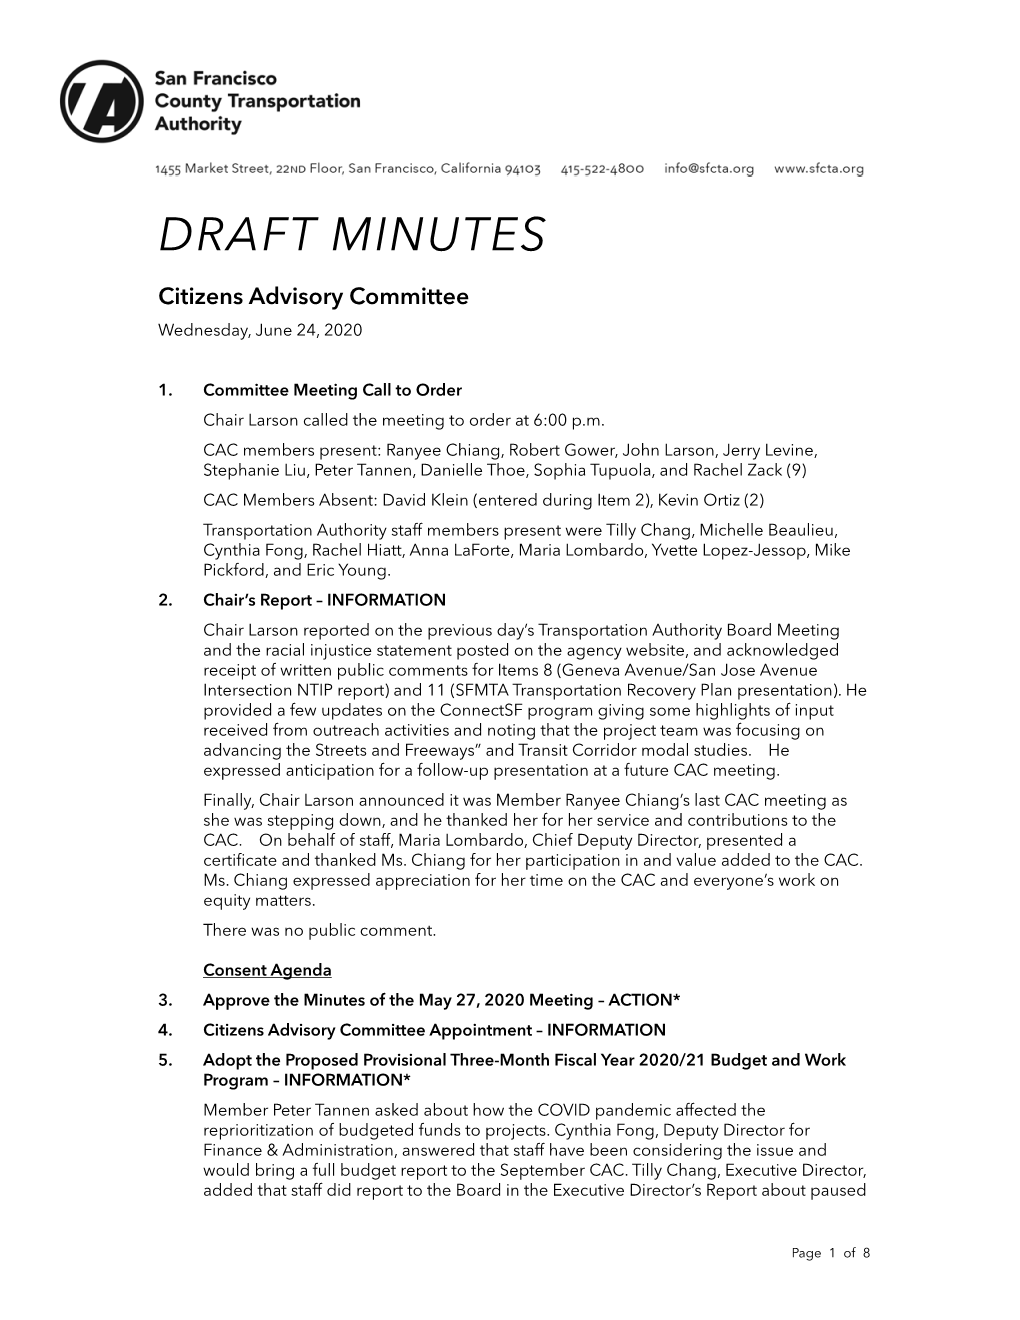 Draft Minutes